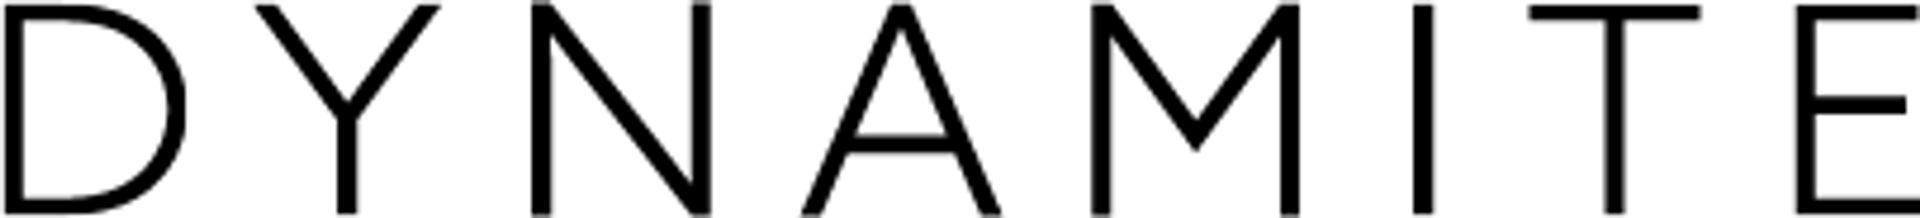 DYNAMITE CLOTHING logo de circulaires